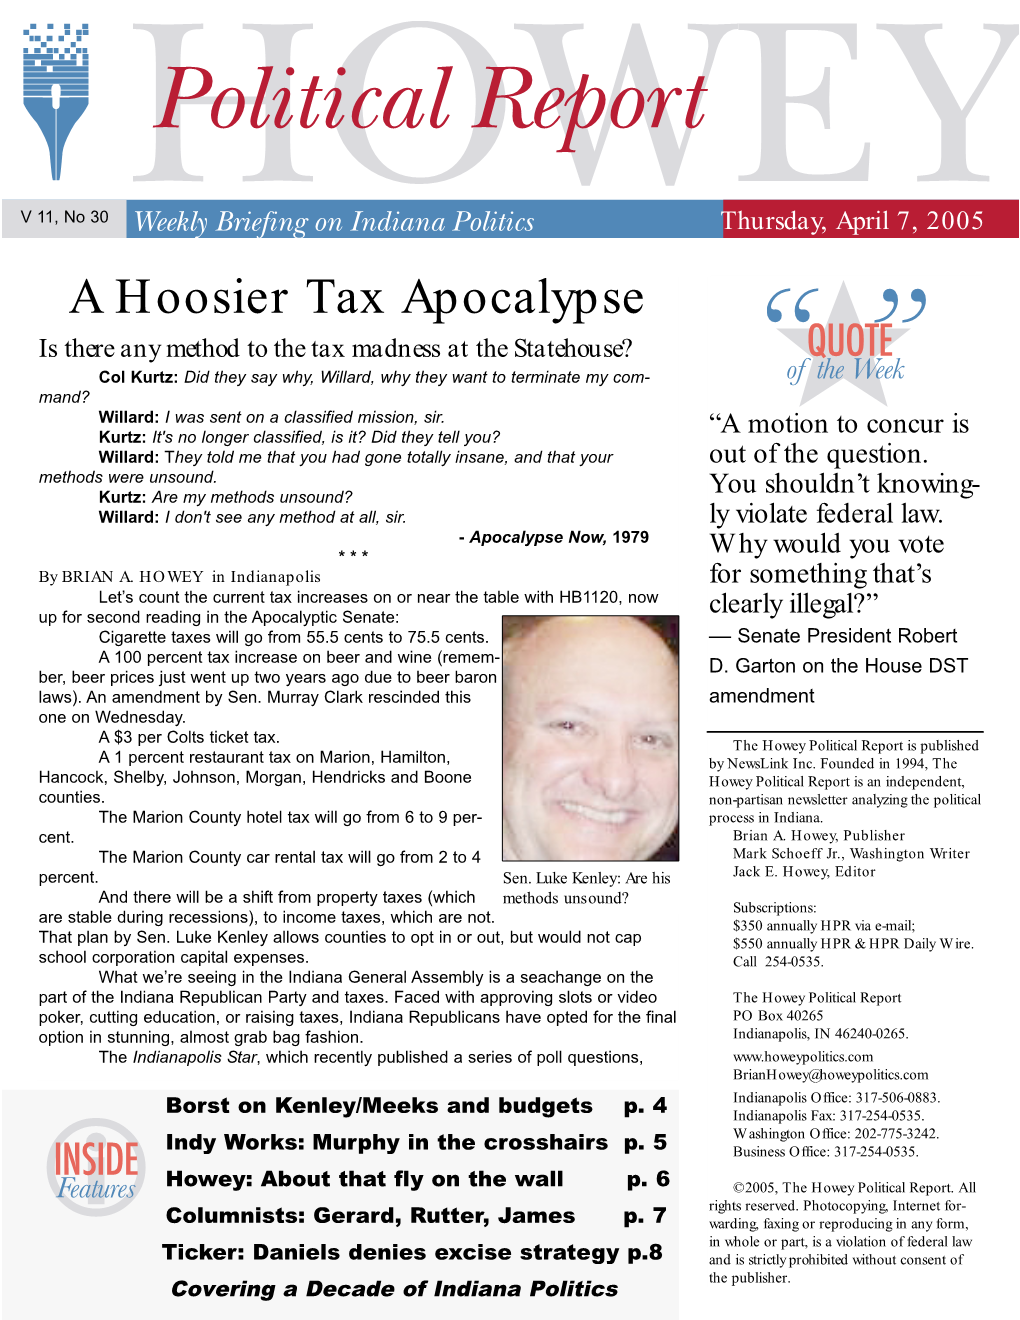 A Hoosier Tax Apocalypse